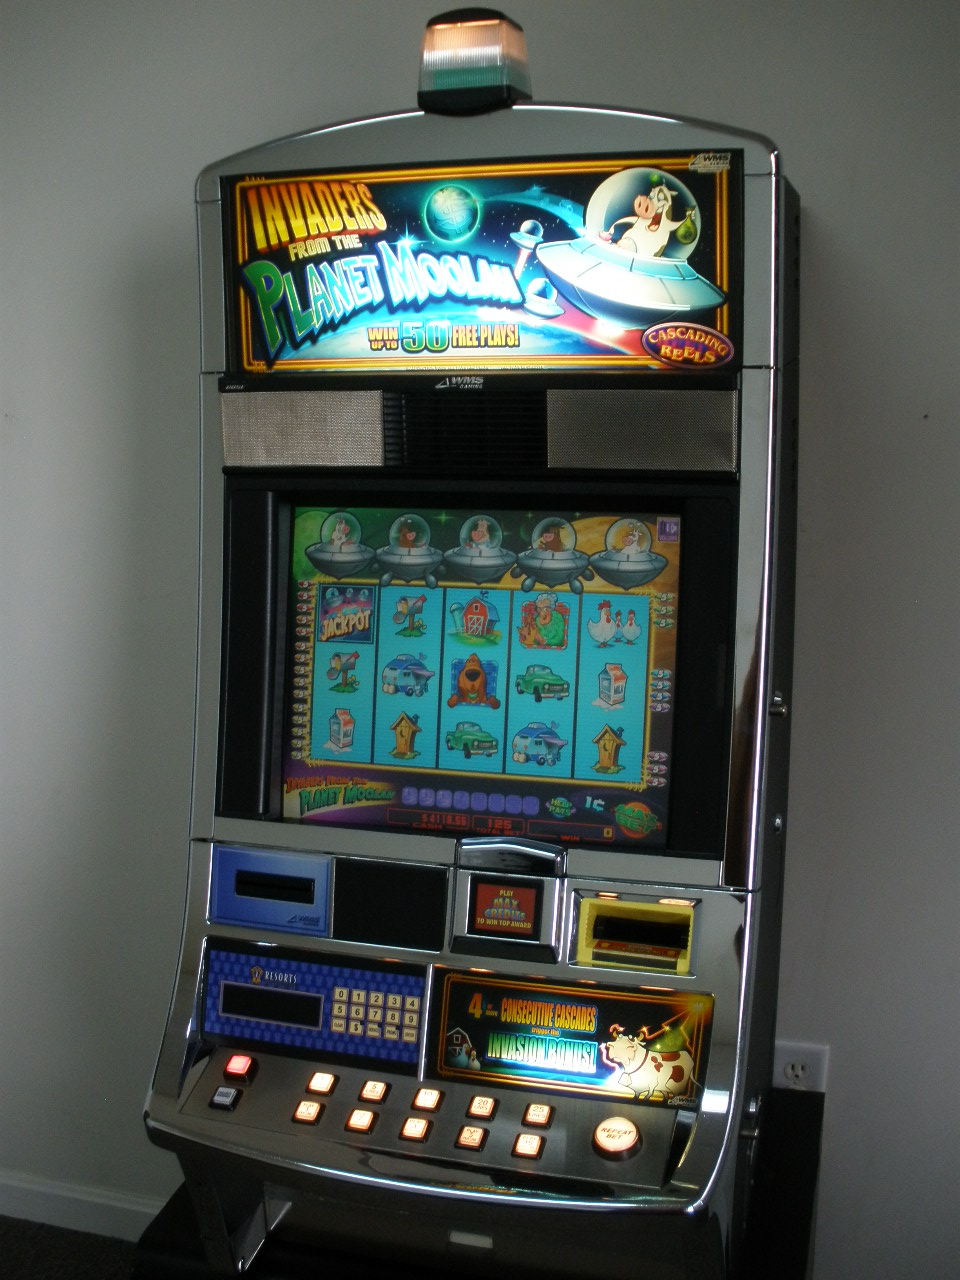 Invaders Planet Moolah Slot Machine